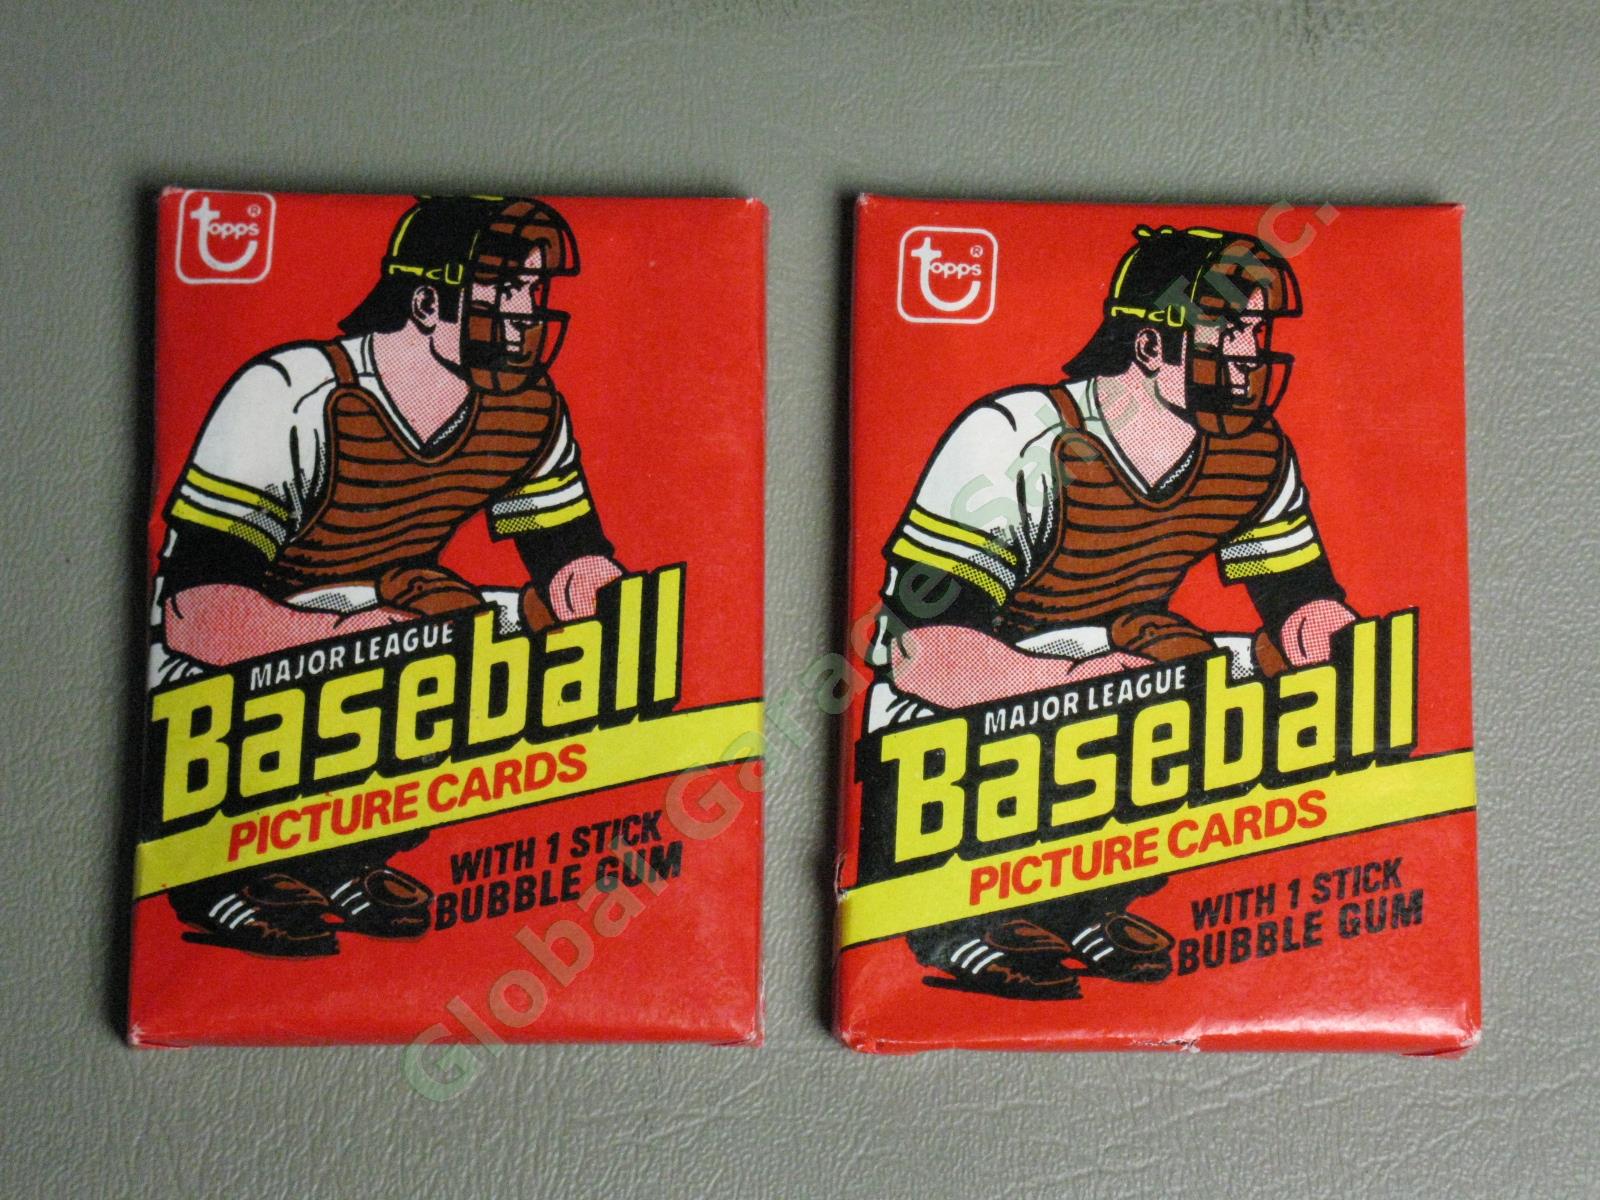 4 Vintage Original Topps 1978 Sealed Baseball Card Wax Packs Lot No Reserve!! 1